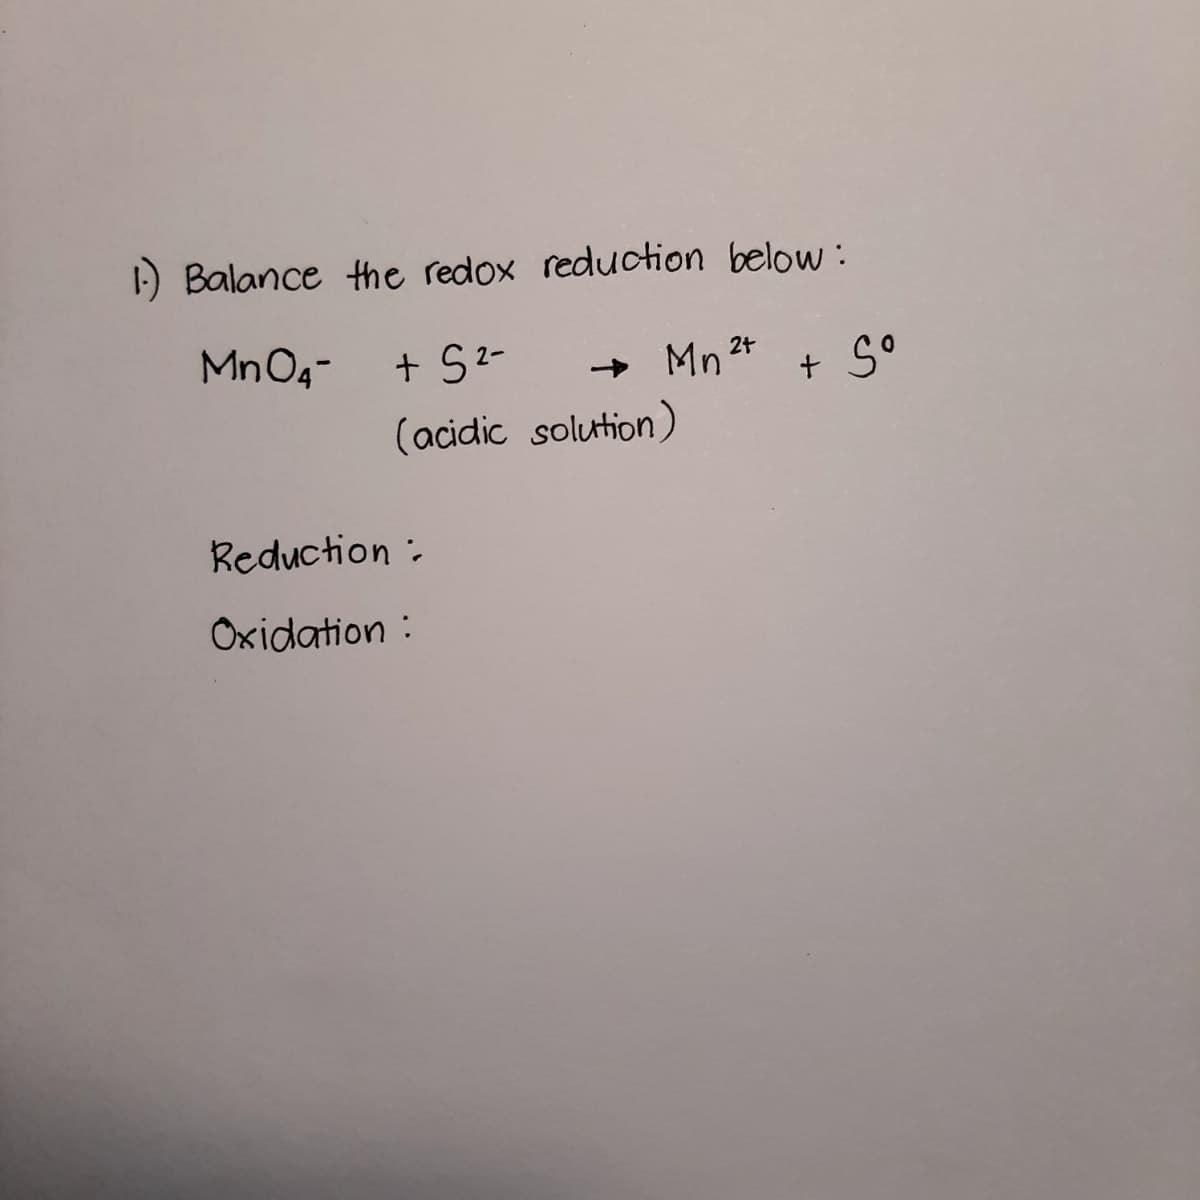 1) Balance the redox reduction below :
MnO4-
+ S2-
Mn2*
+ S°
(acidic solution)
Reduction:
Oxidation :
